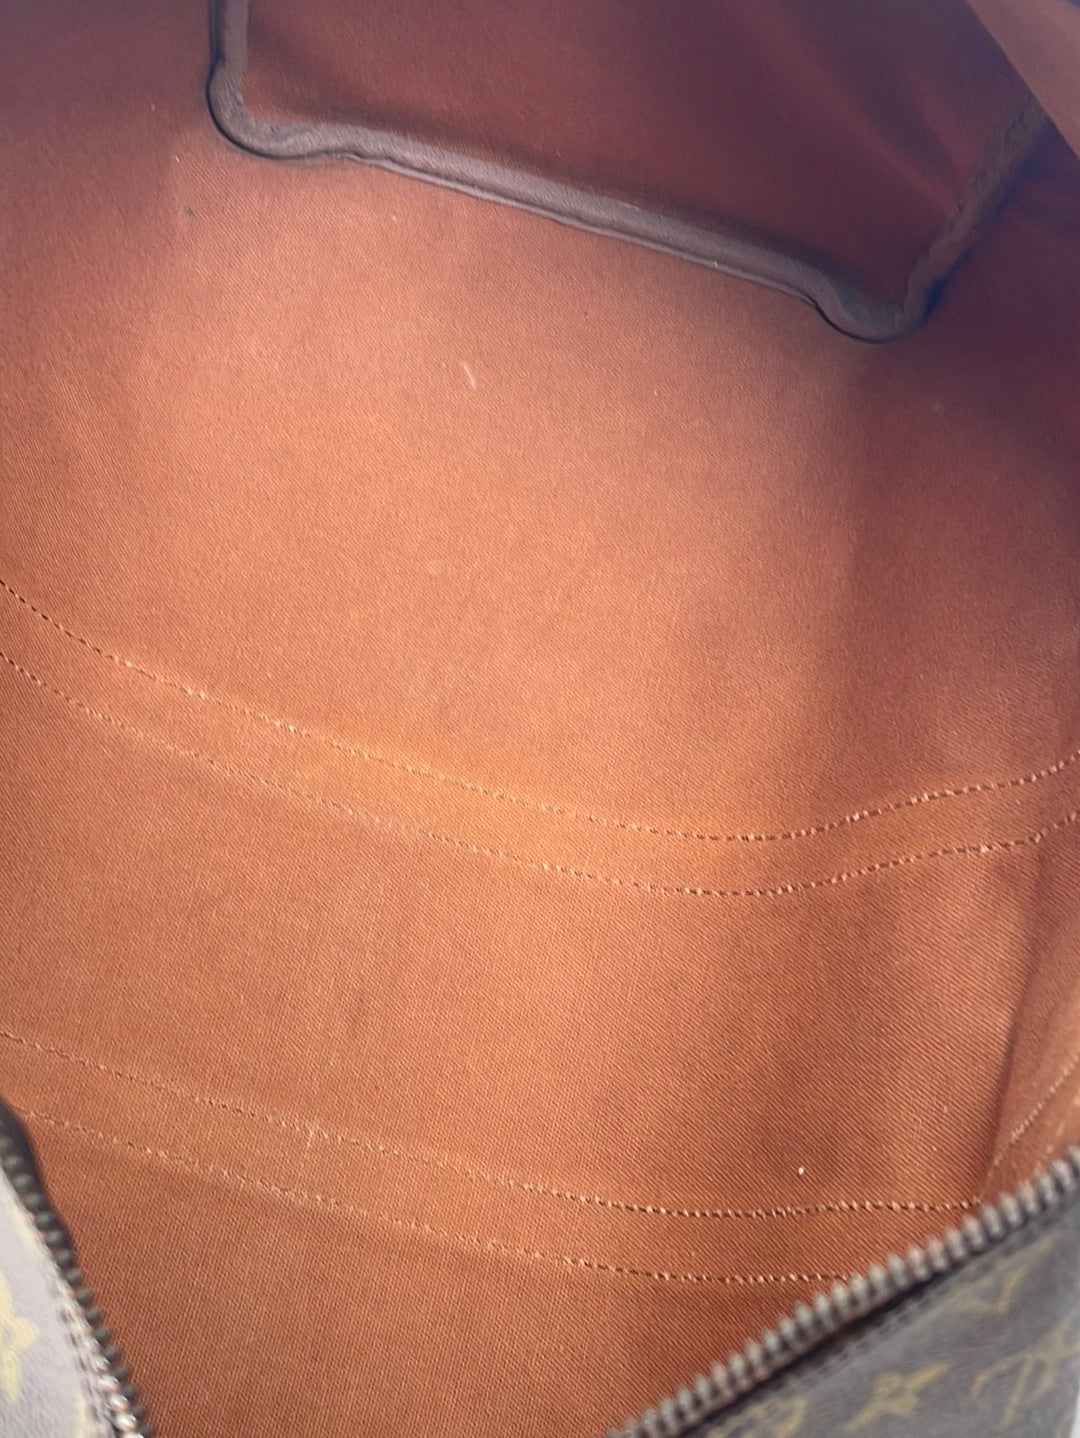 PRELOVED Louis Vuitton Keepall  50 Monogram Duffel Bag 844MB 031523